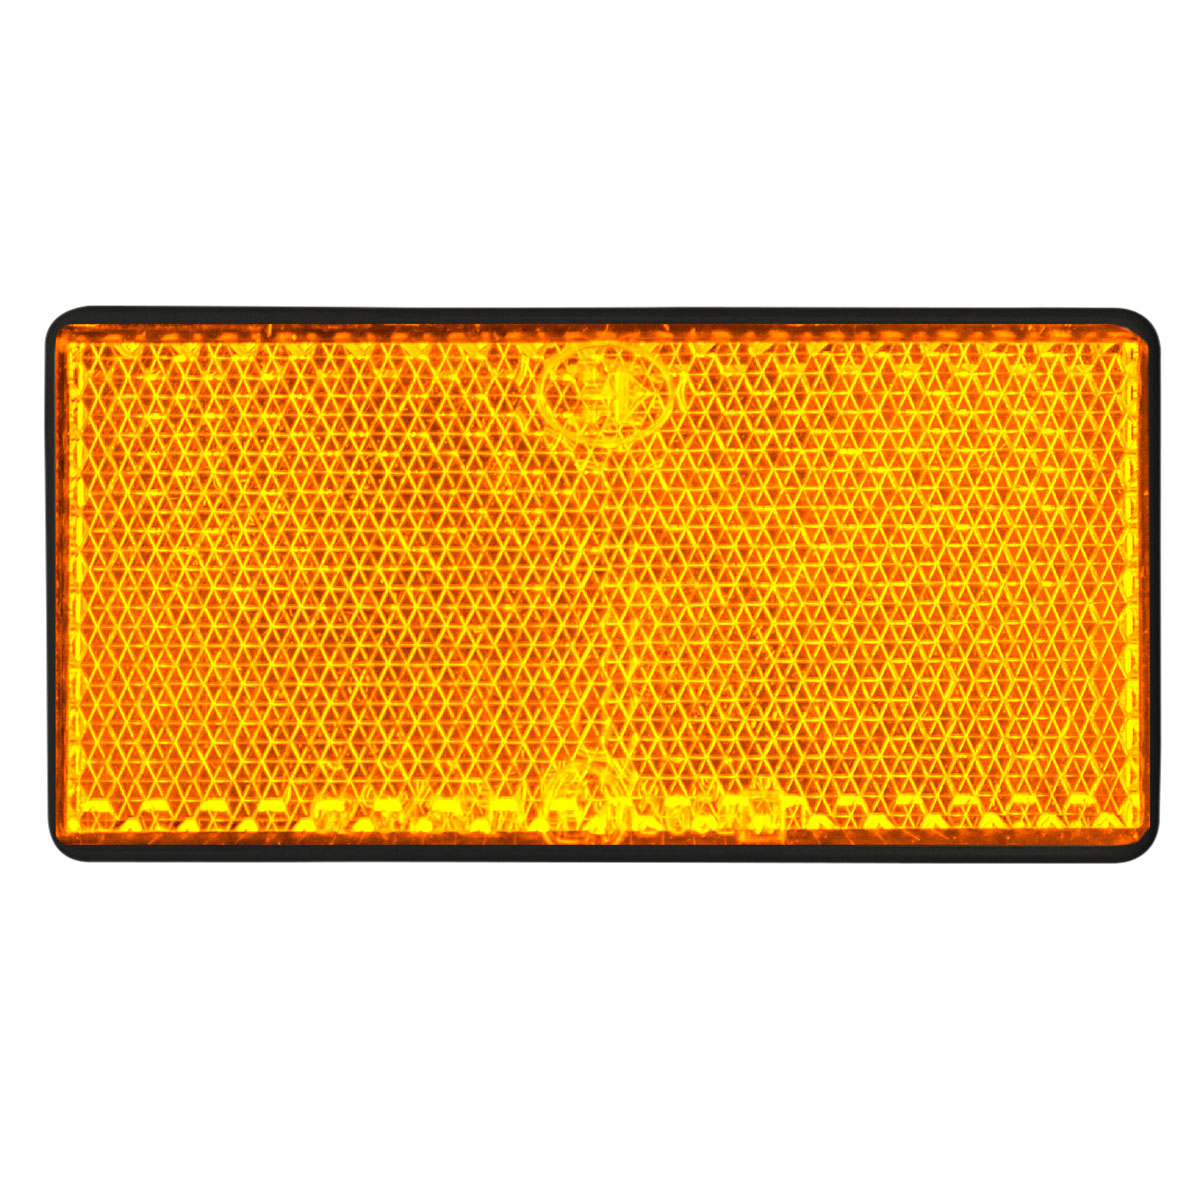 Reflektor 70x35mm, selbstklebend, Farbe: orange - italobee Shop, 3,57 €